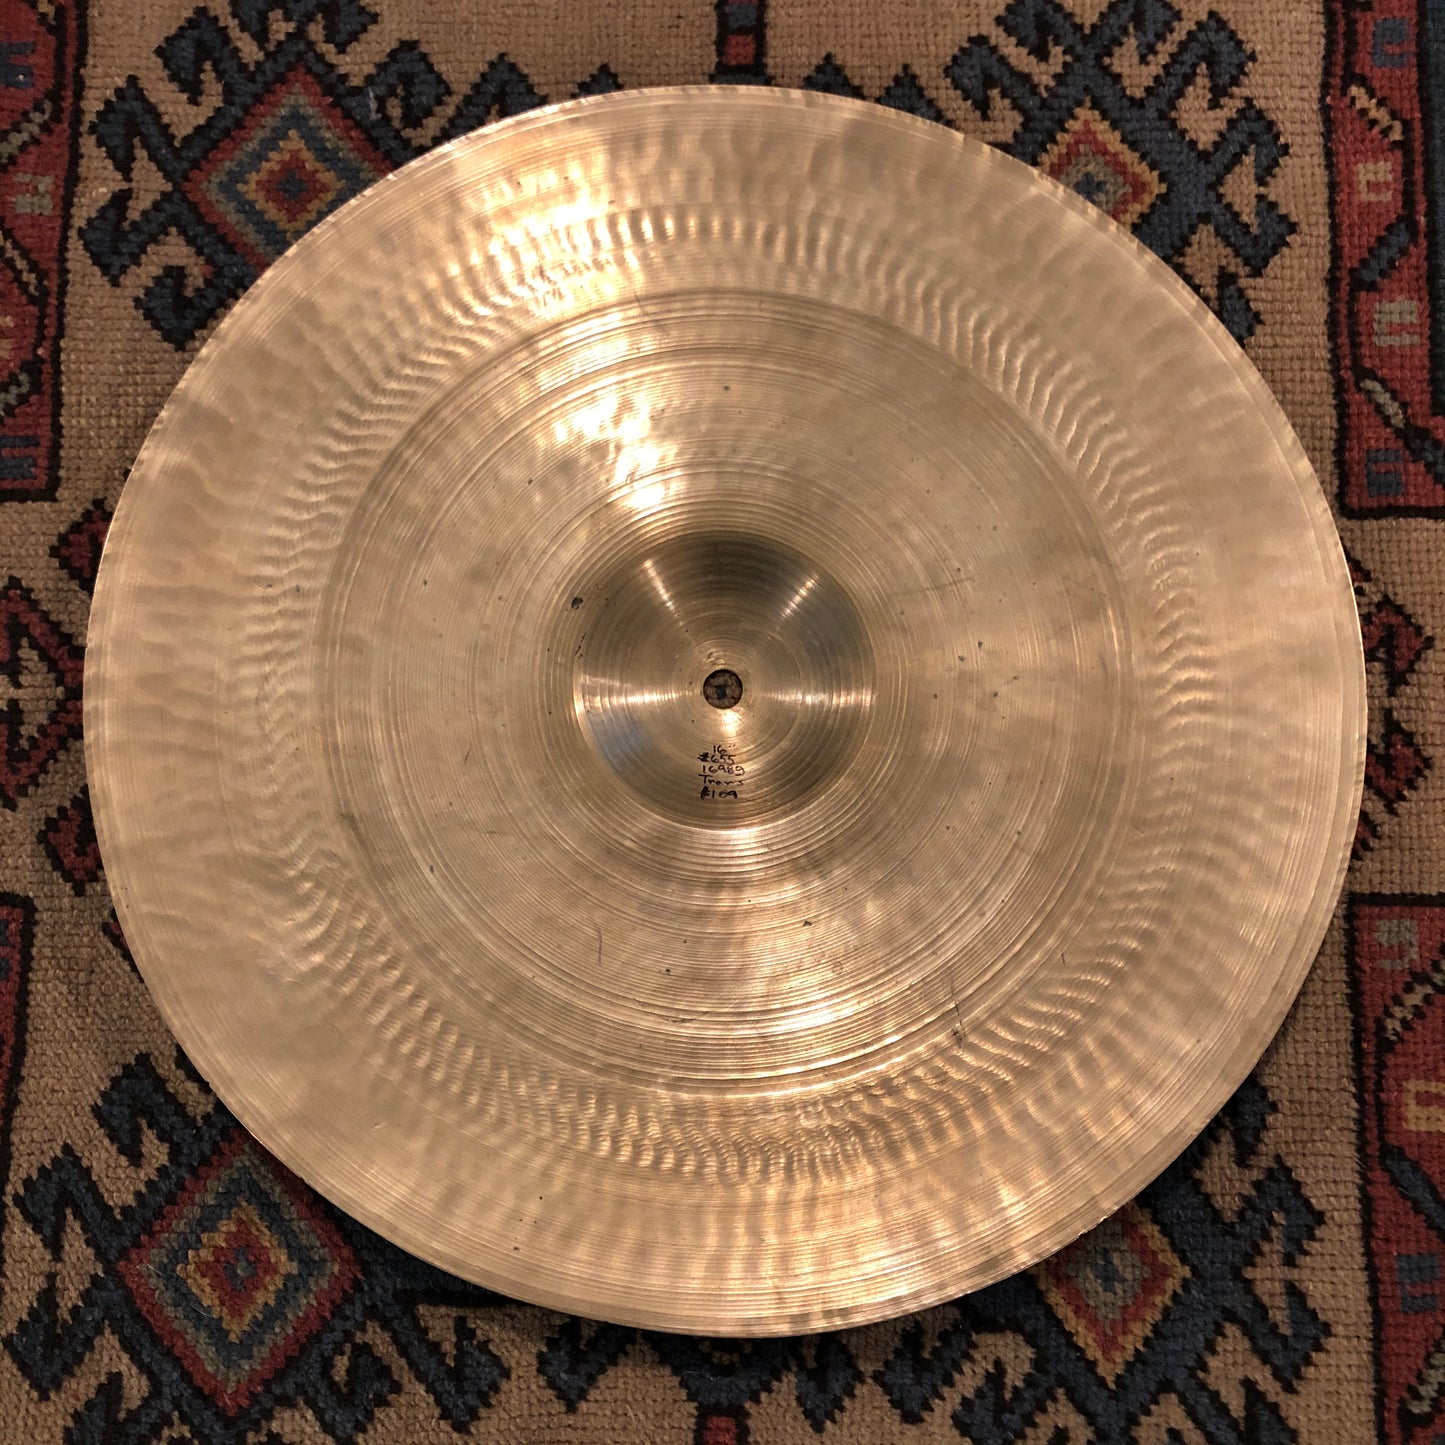 16" Zildjian A 1947-53 Small Ride Cymbal 1698g #655